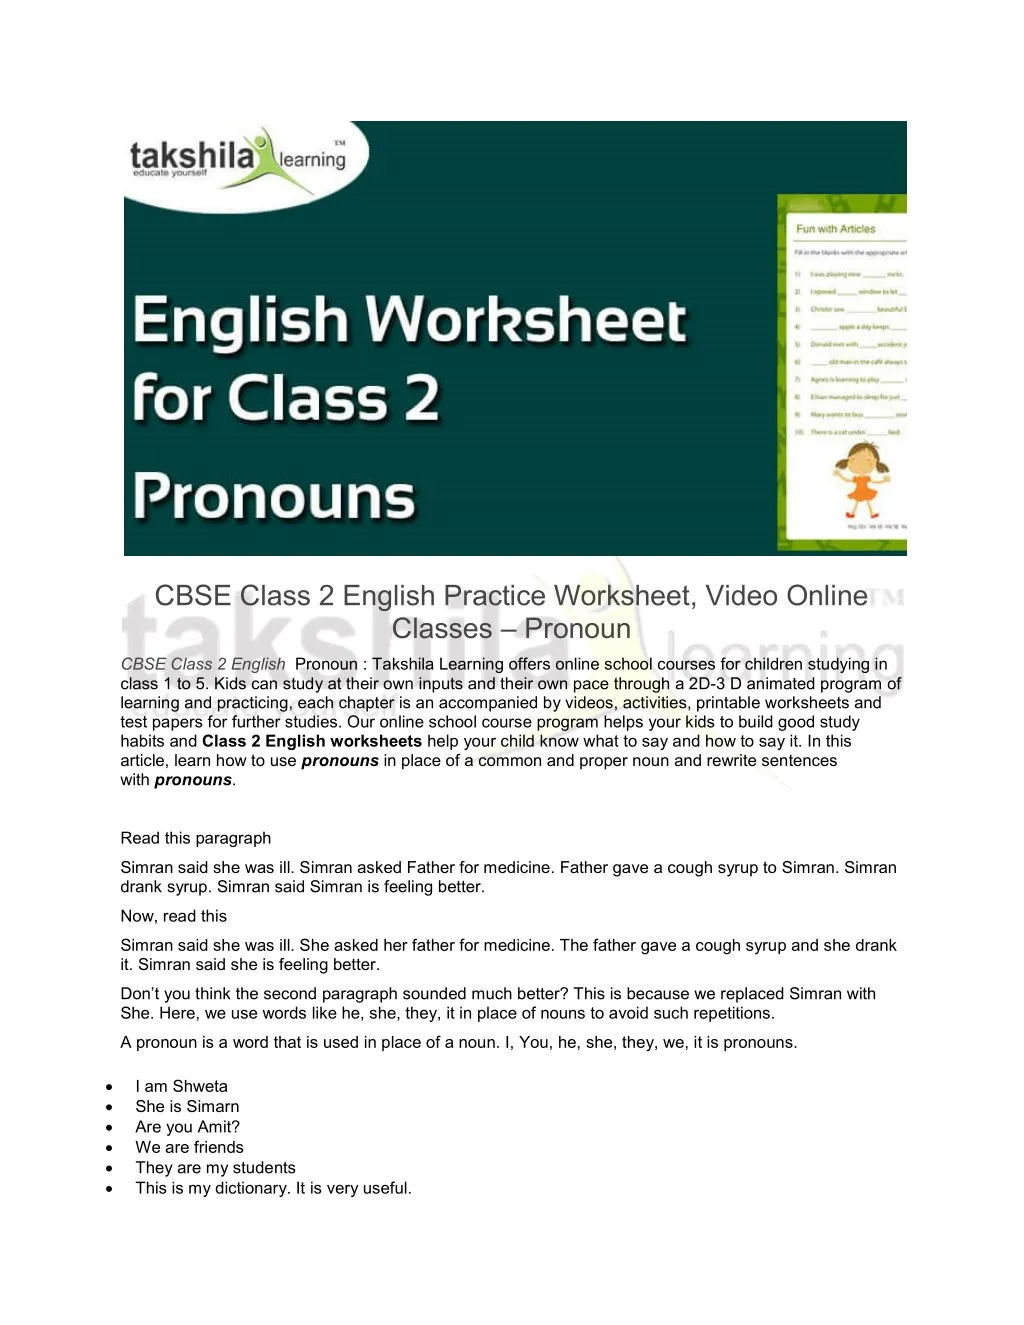 cbse class 2 english practice worksheet video